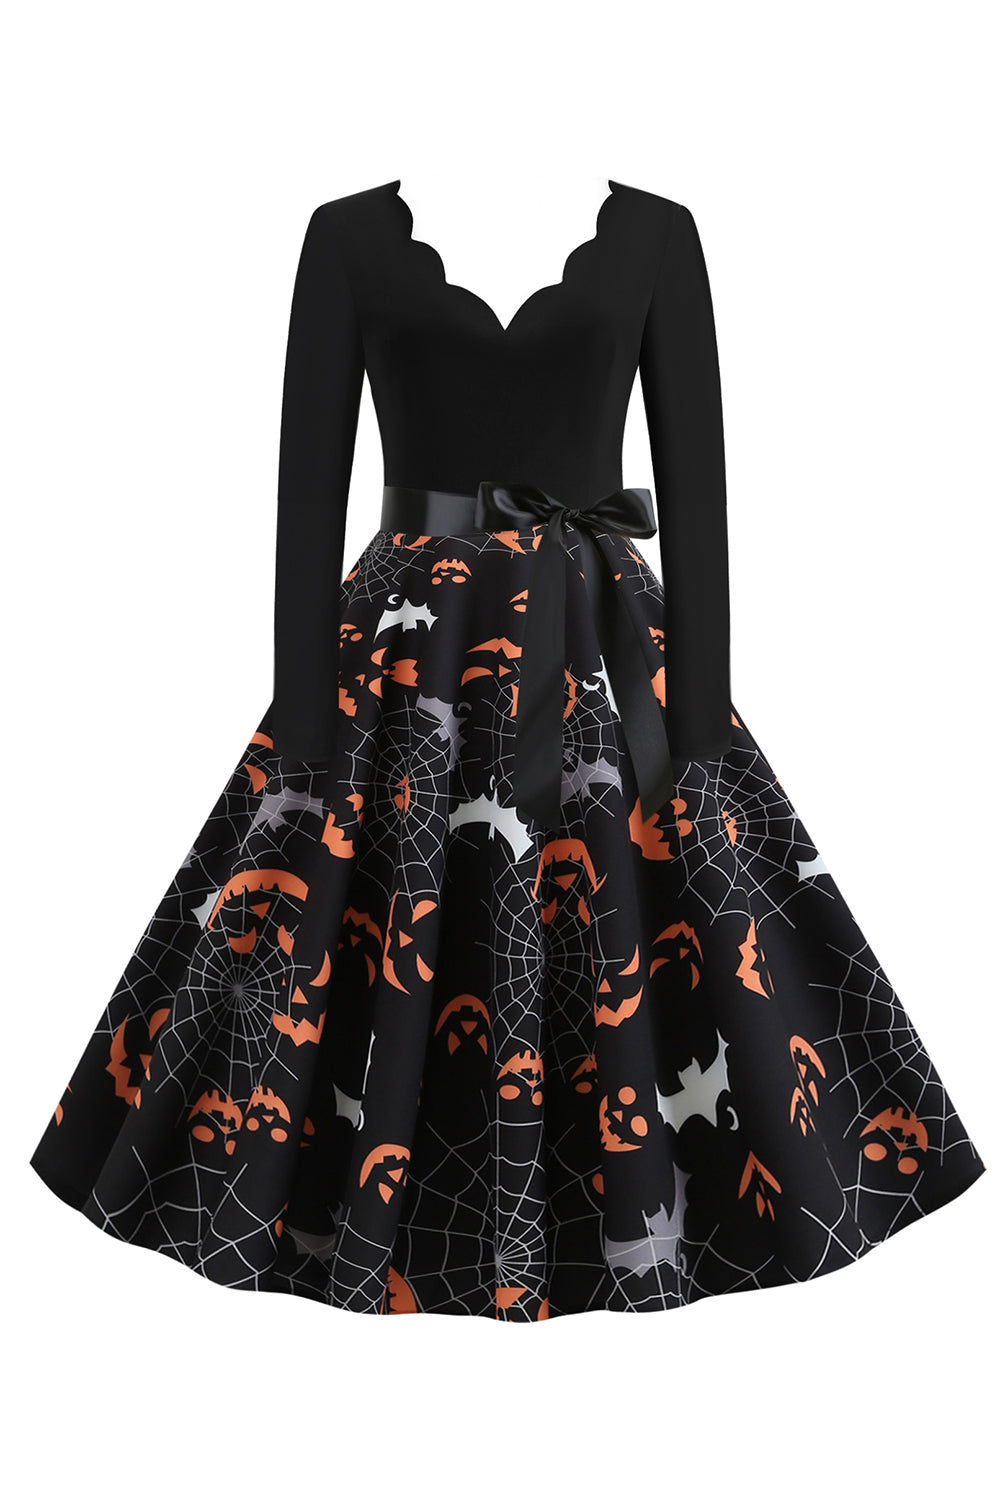 V Neck Black Halloween Vintage Dress with Long Sleeves